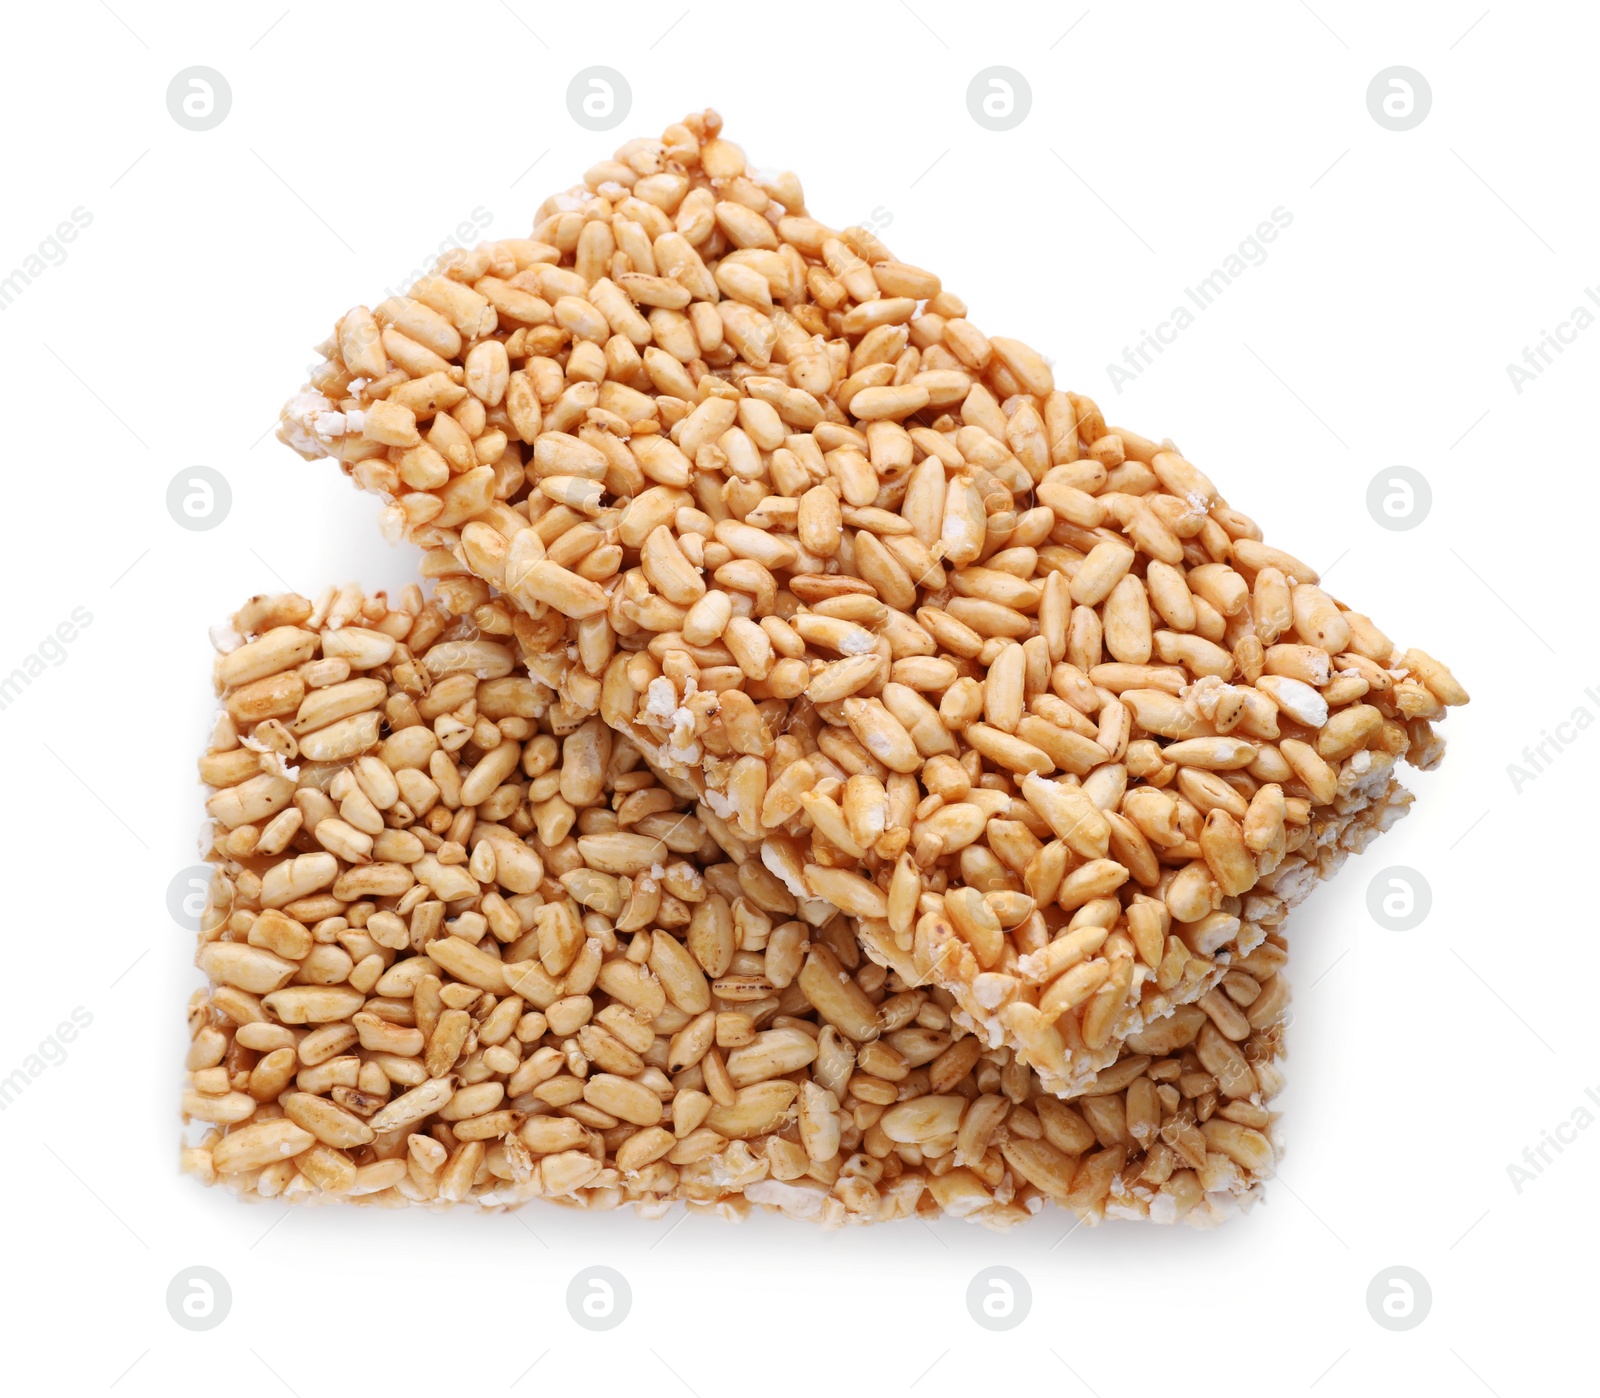 Photo of Puffed rice bars (kozinaki) on white background, top view